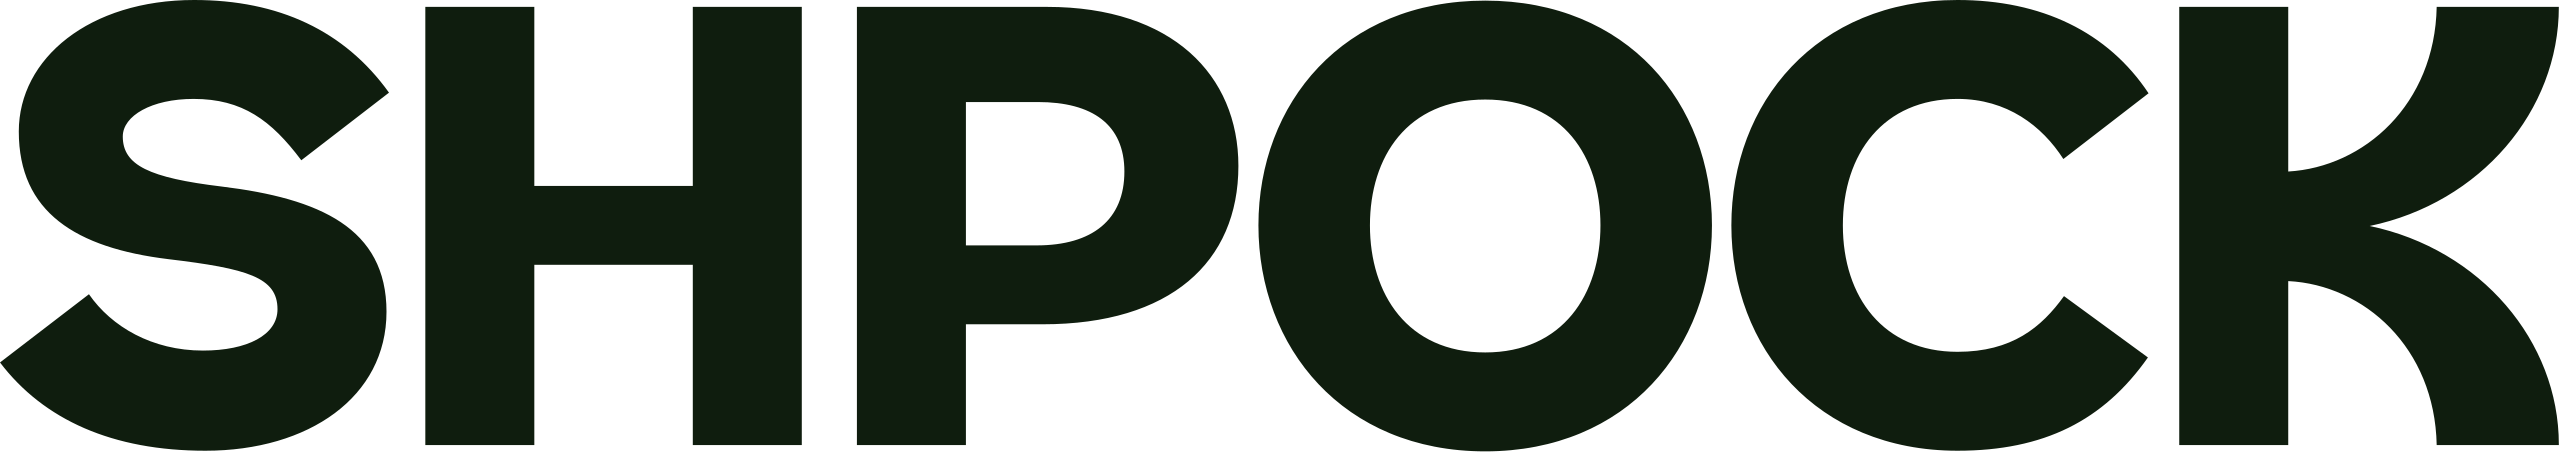 Shpock logo